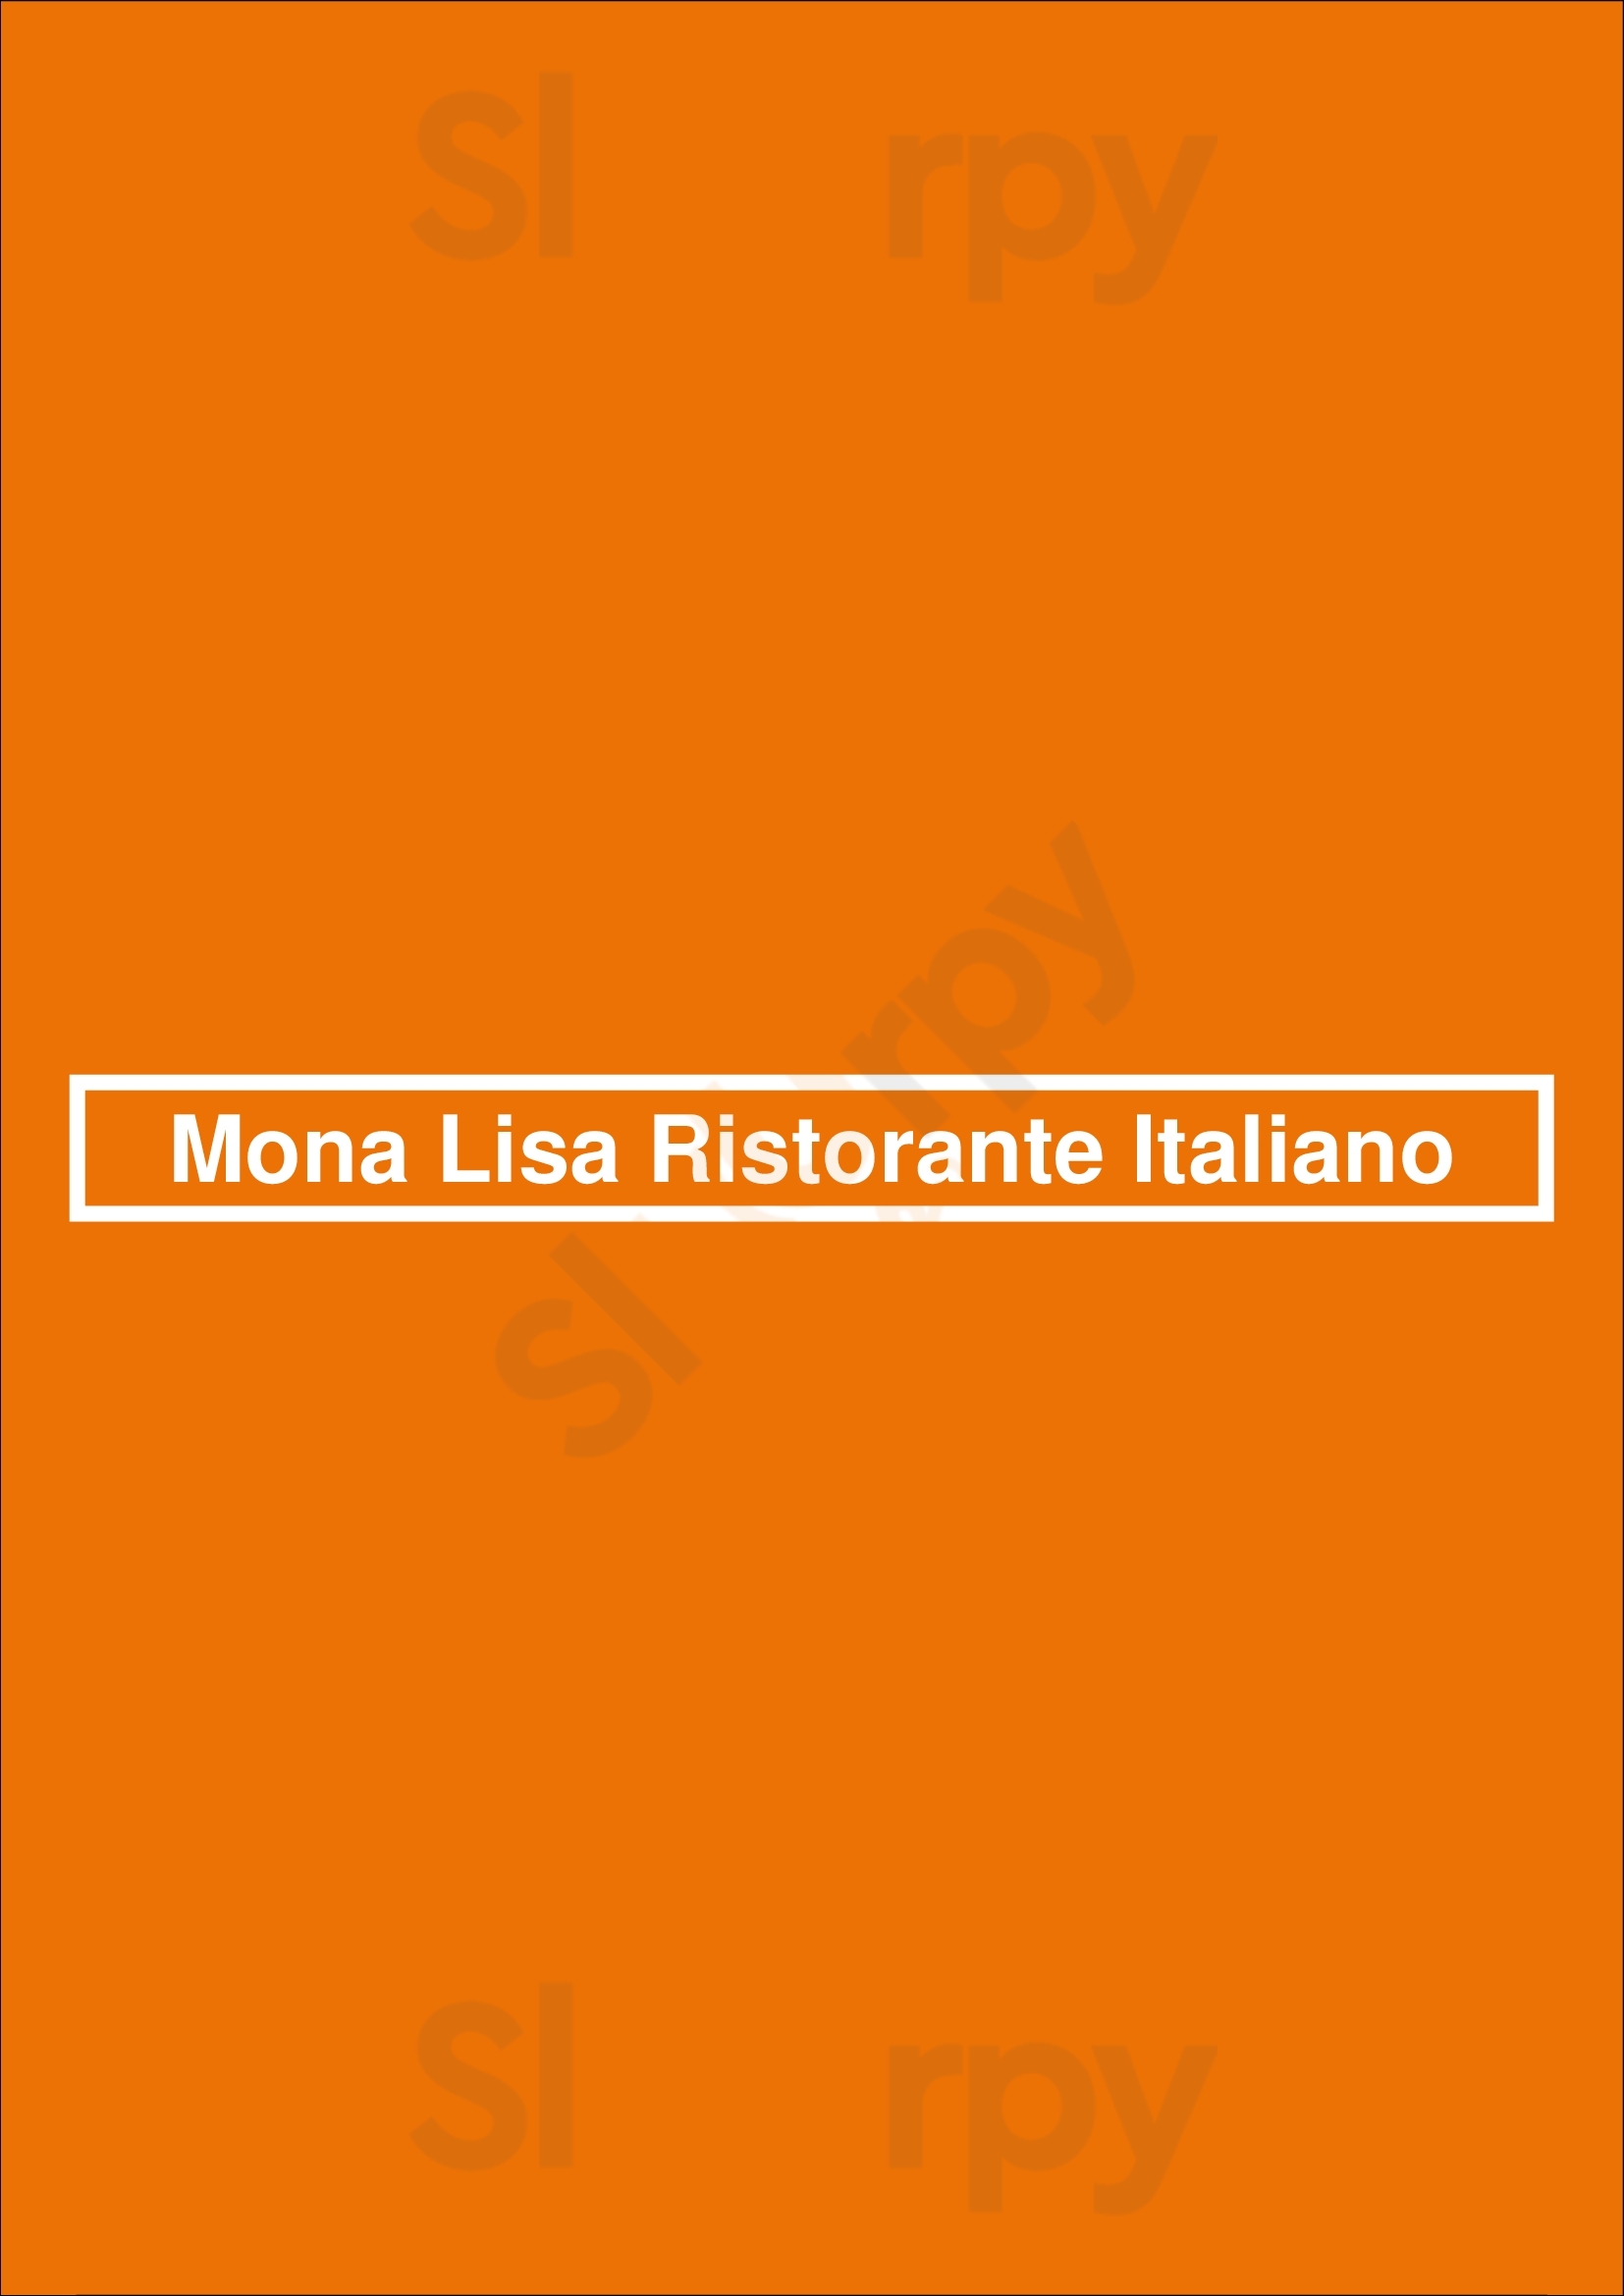 Mona Lisa Ristorante Italiano Winnipeg Menu - 1